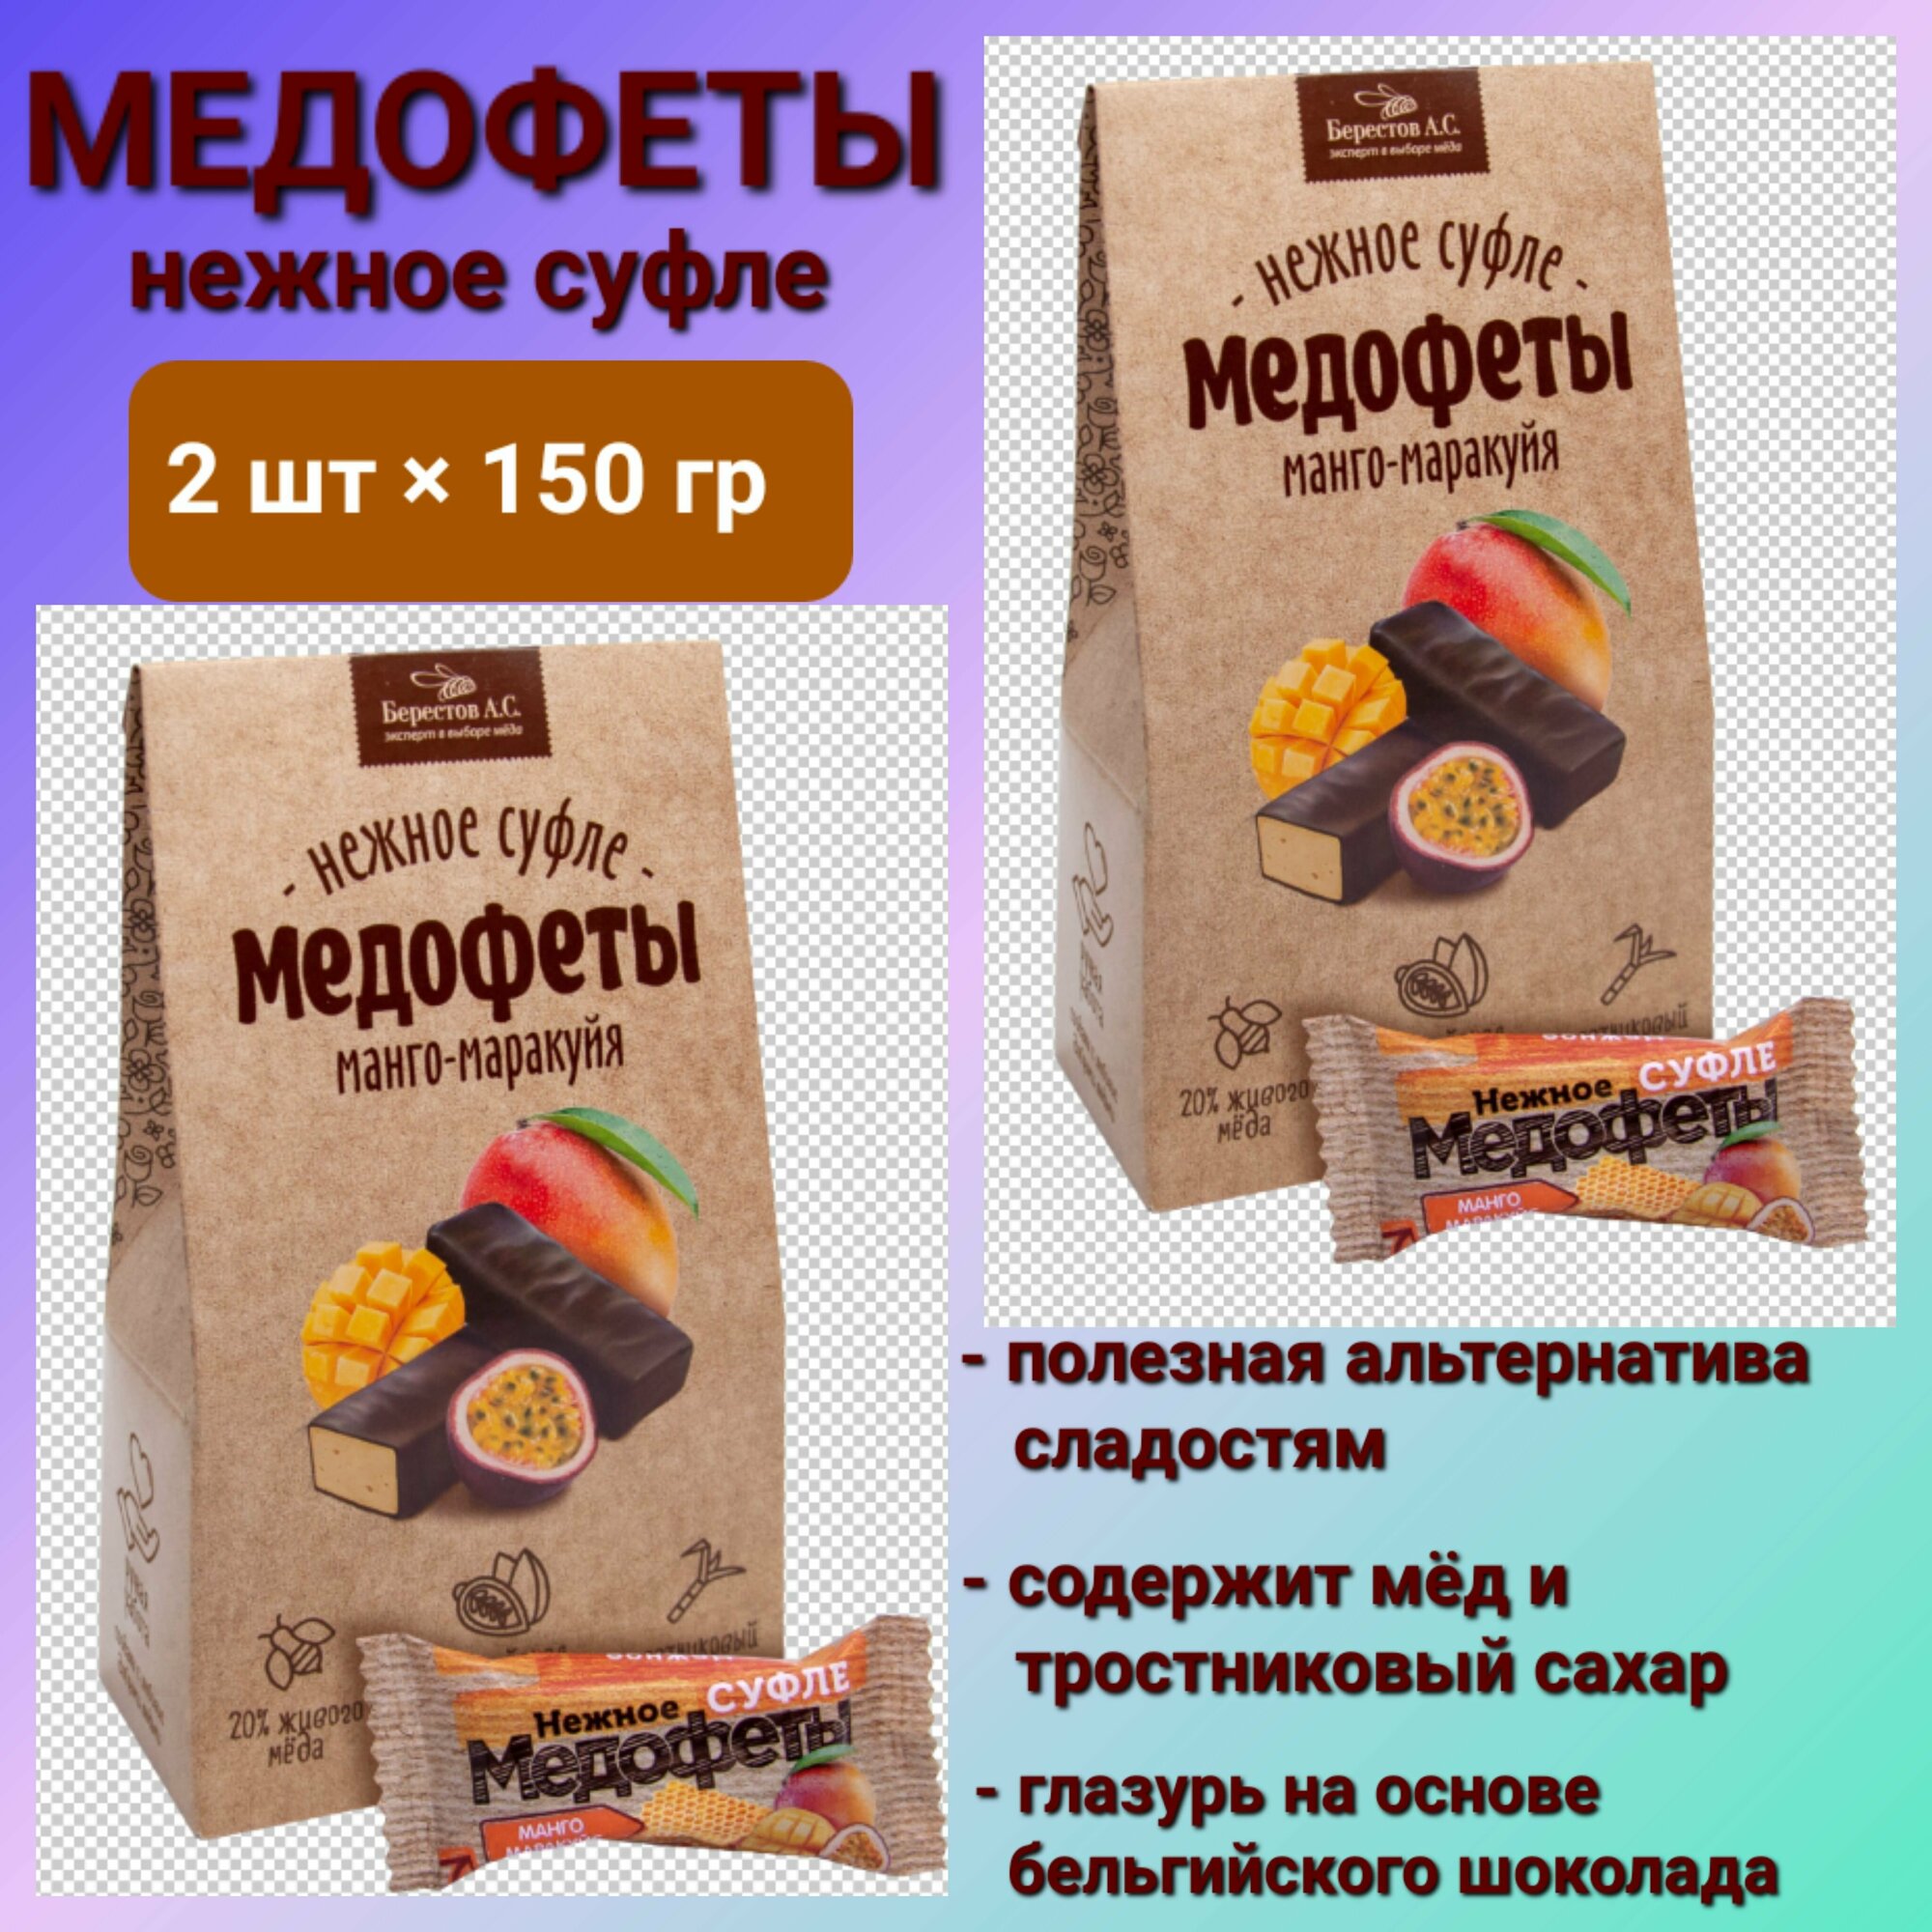 Медофеты Суфле манго-маракуйя, 2шт * 150 гр